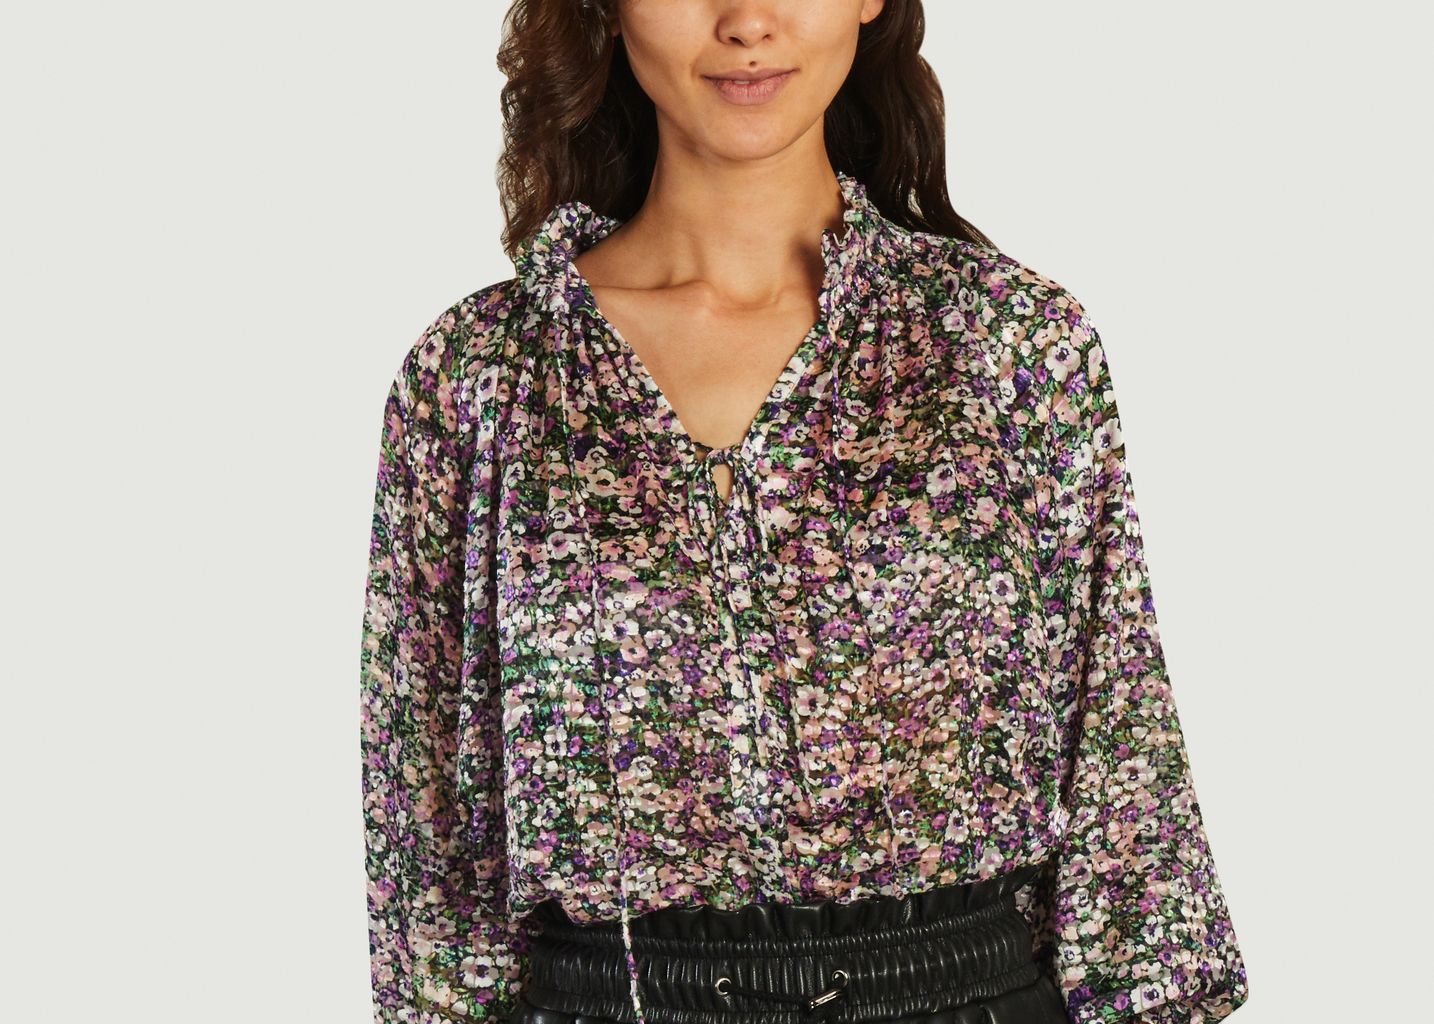 Leony Liberty print blouse - Suncoo